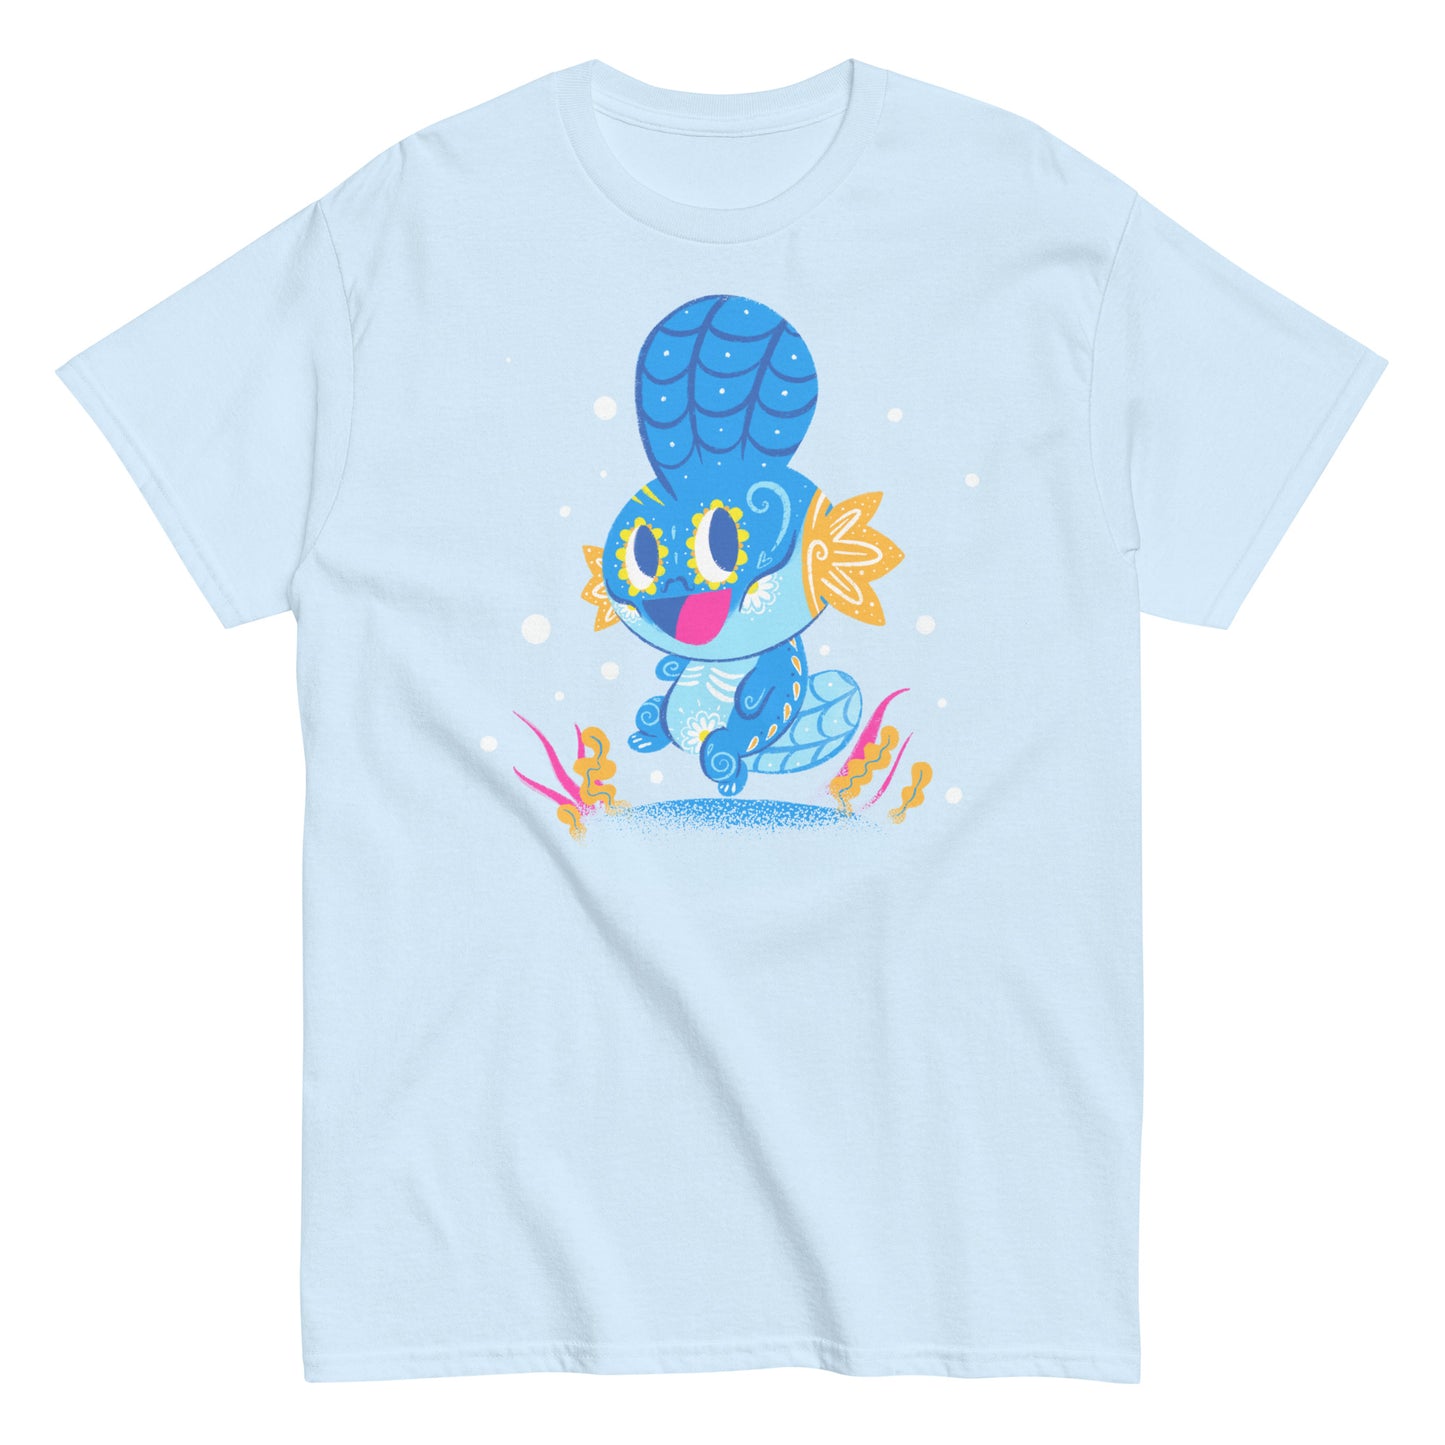 Mudkip - Pokemon PopMuertos Sugar Skull T-Shirt